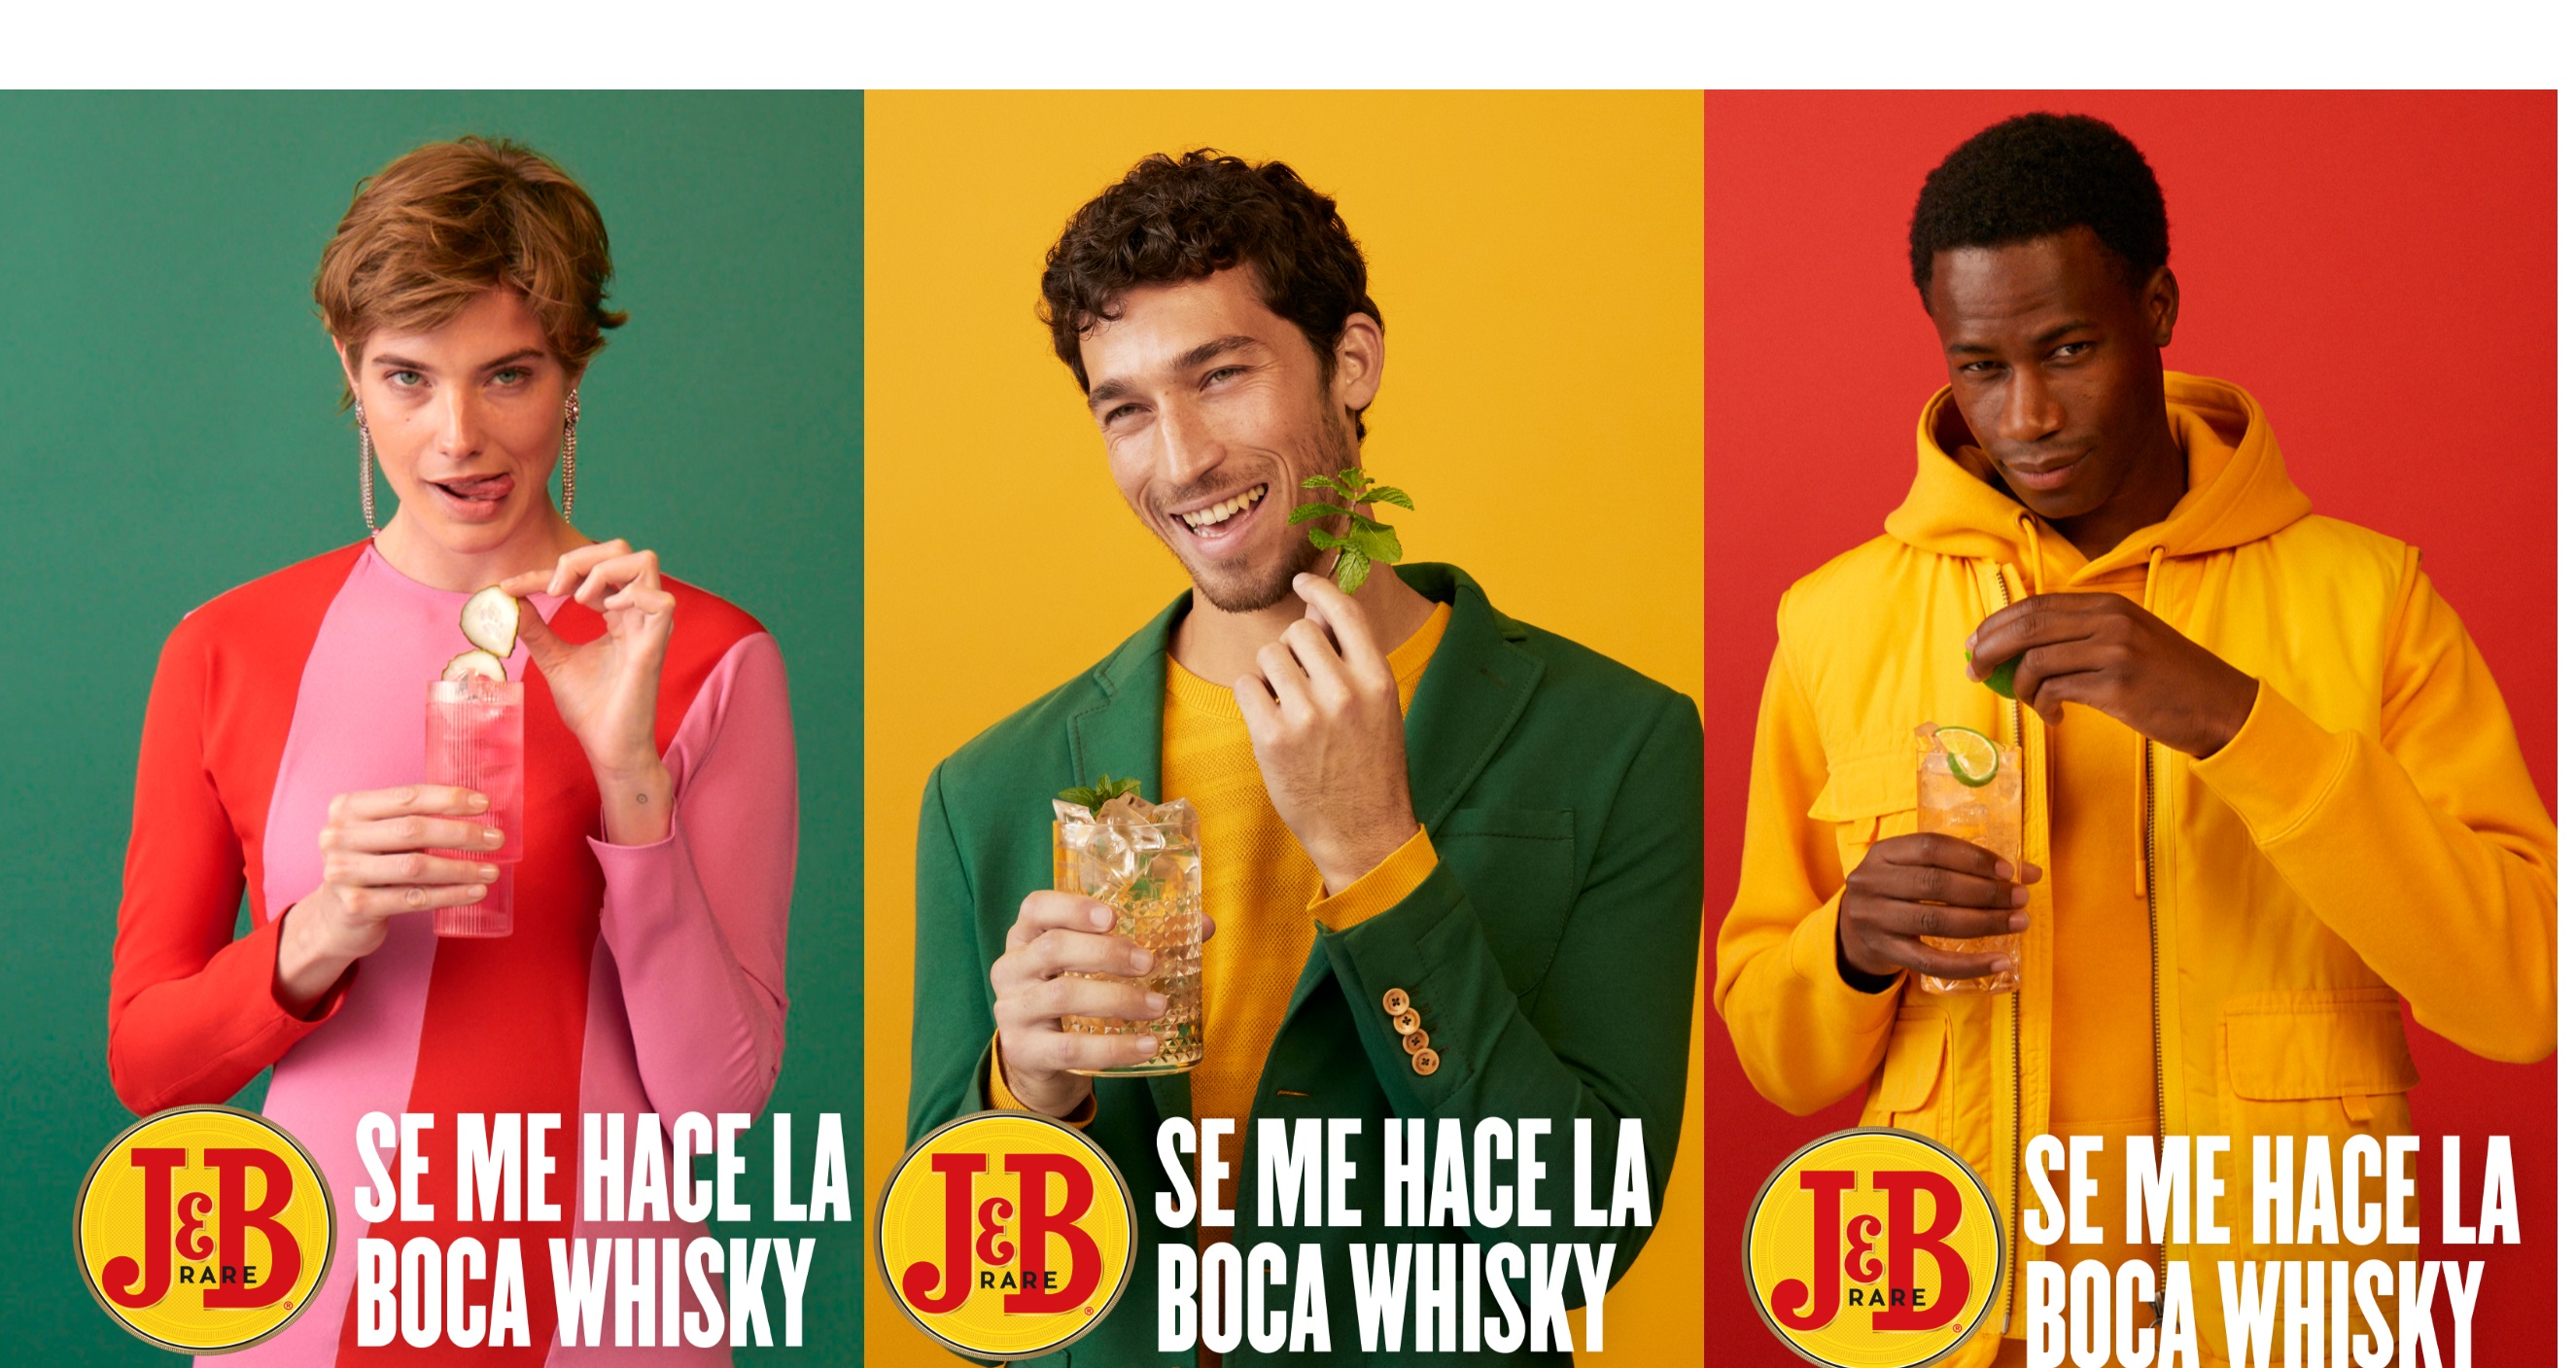 #semehacelabocawhisky, J&B, grande, programapublicidad